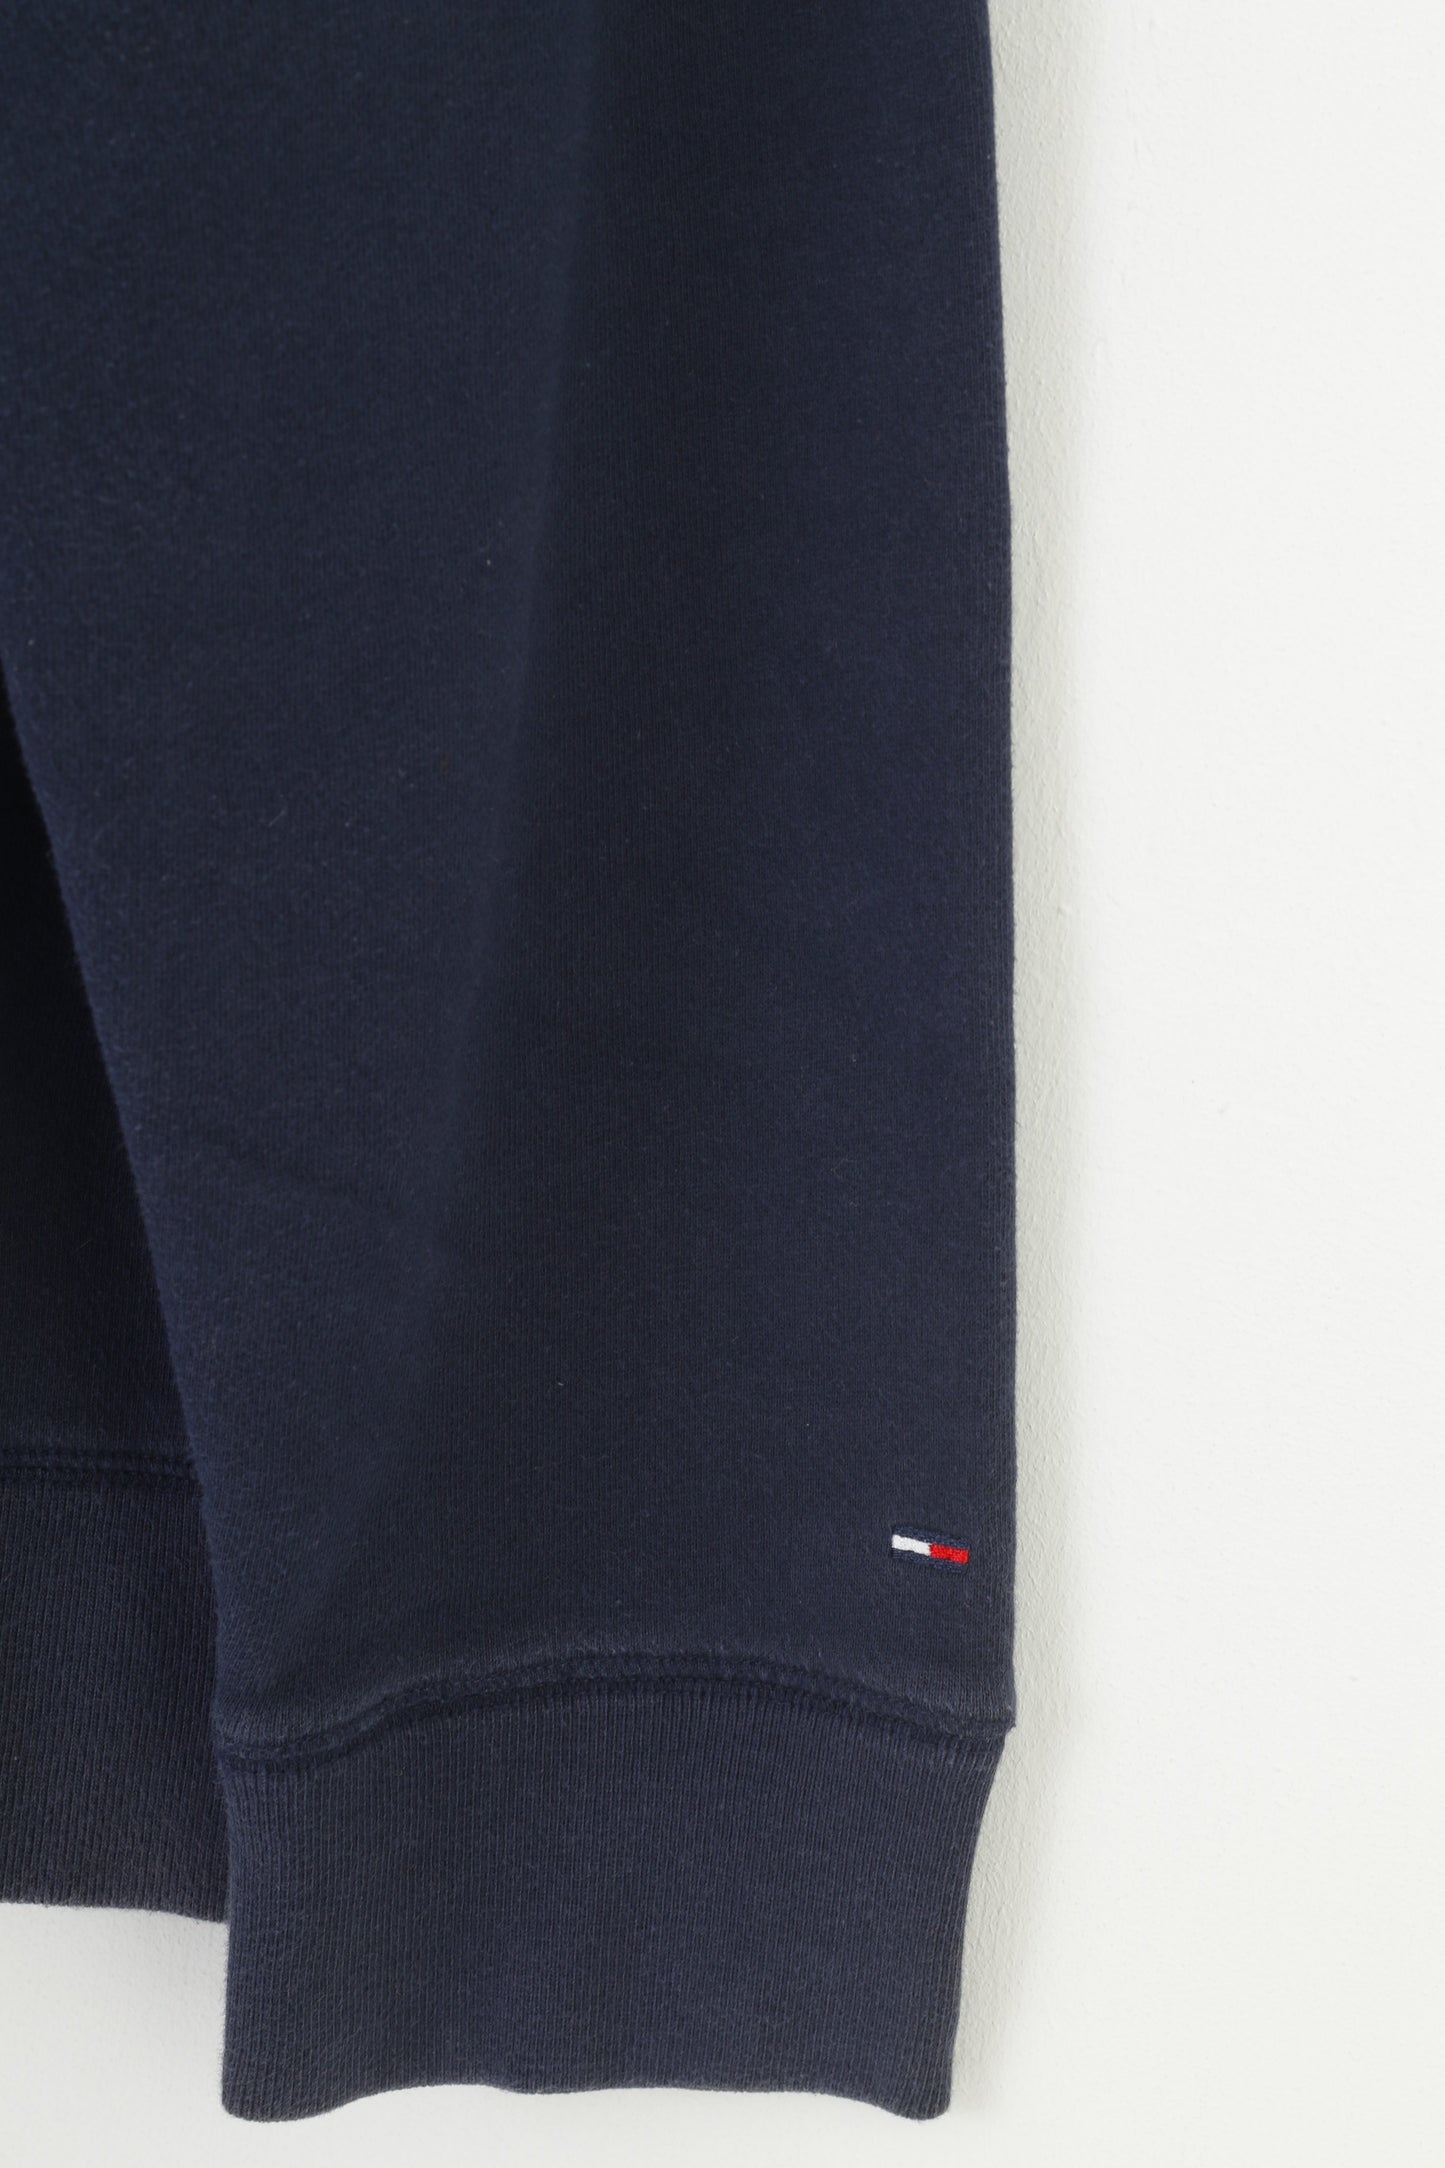 Hilfiger Denim Men M Sweatshirt Navy Cotton Full Zipper  Vintage  Top